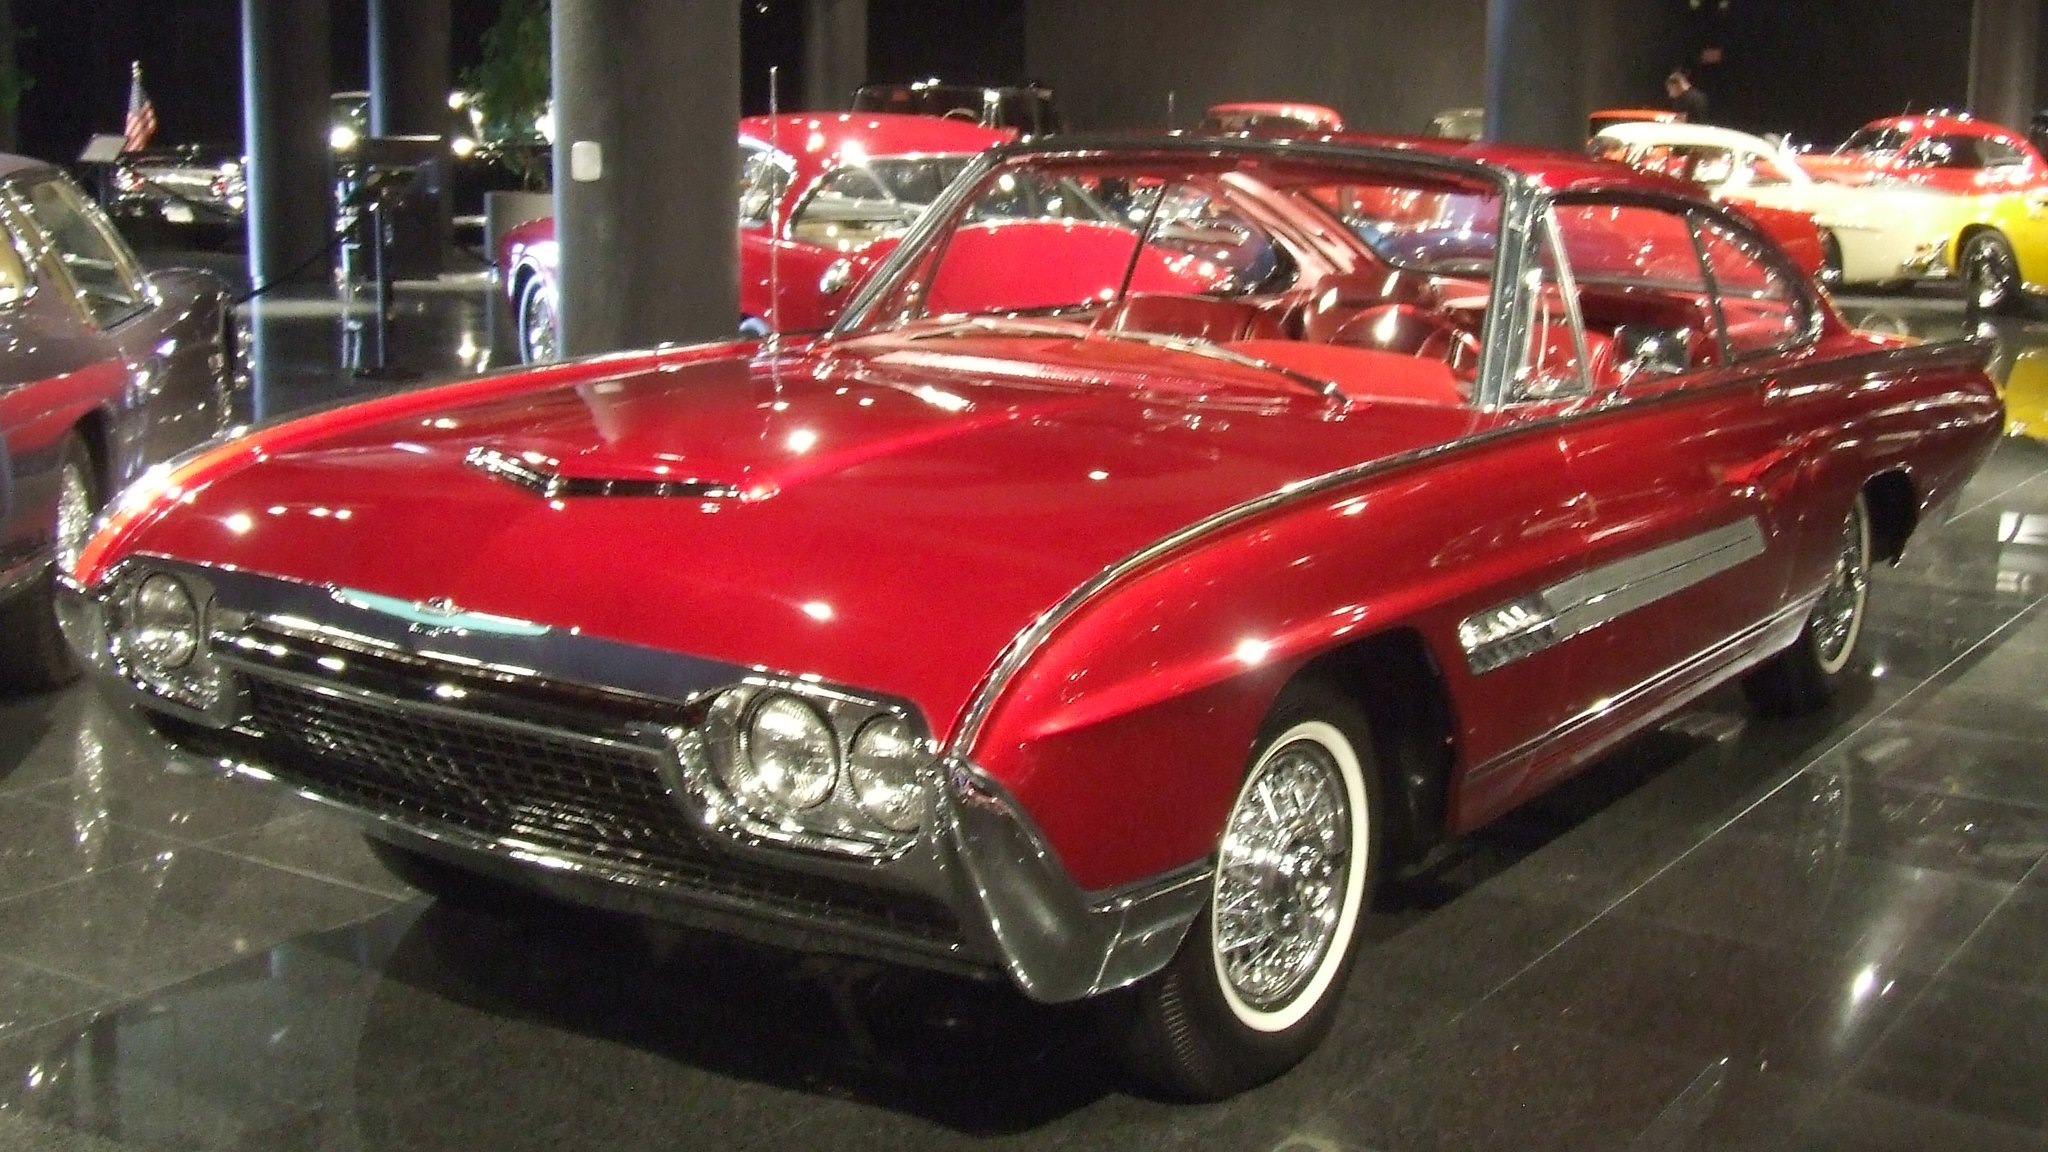 1963 Ford Thunderbird “Italien” Concept Car